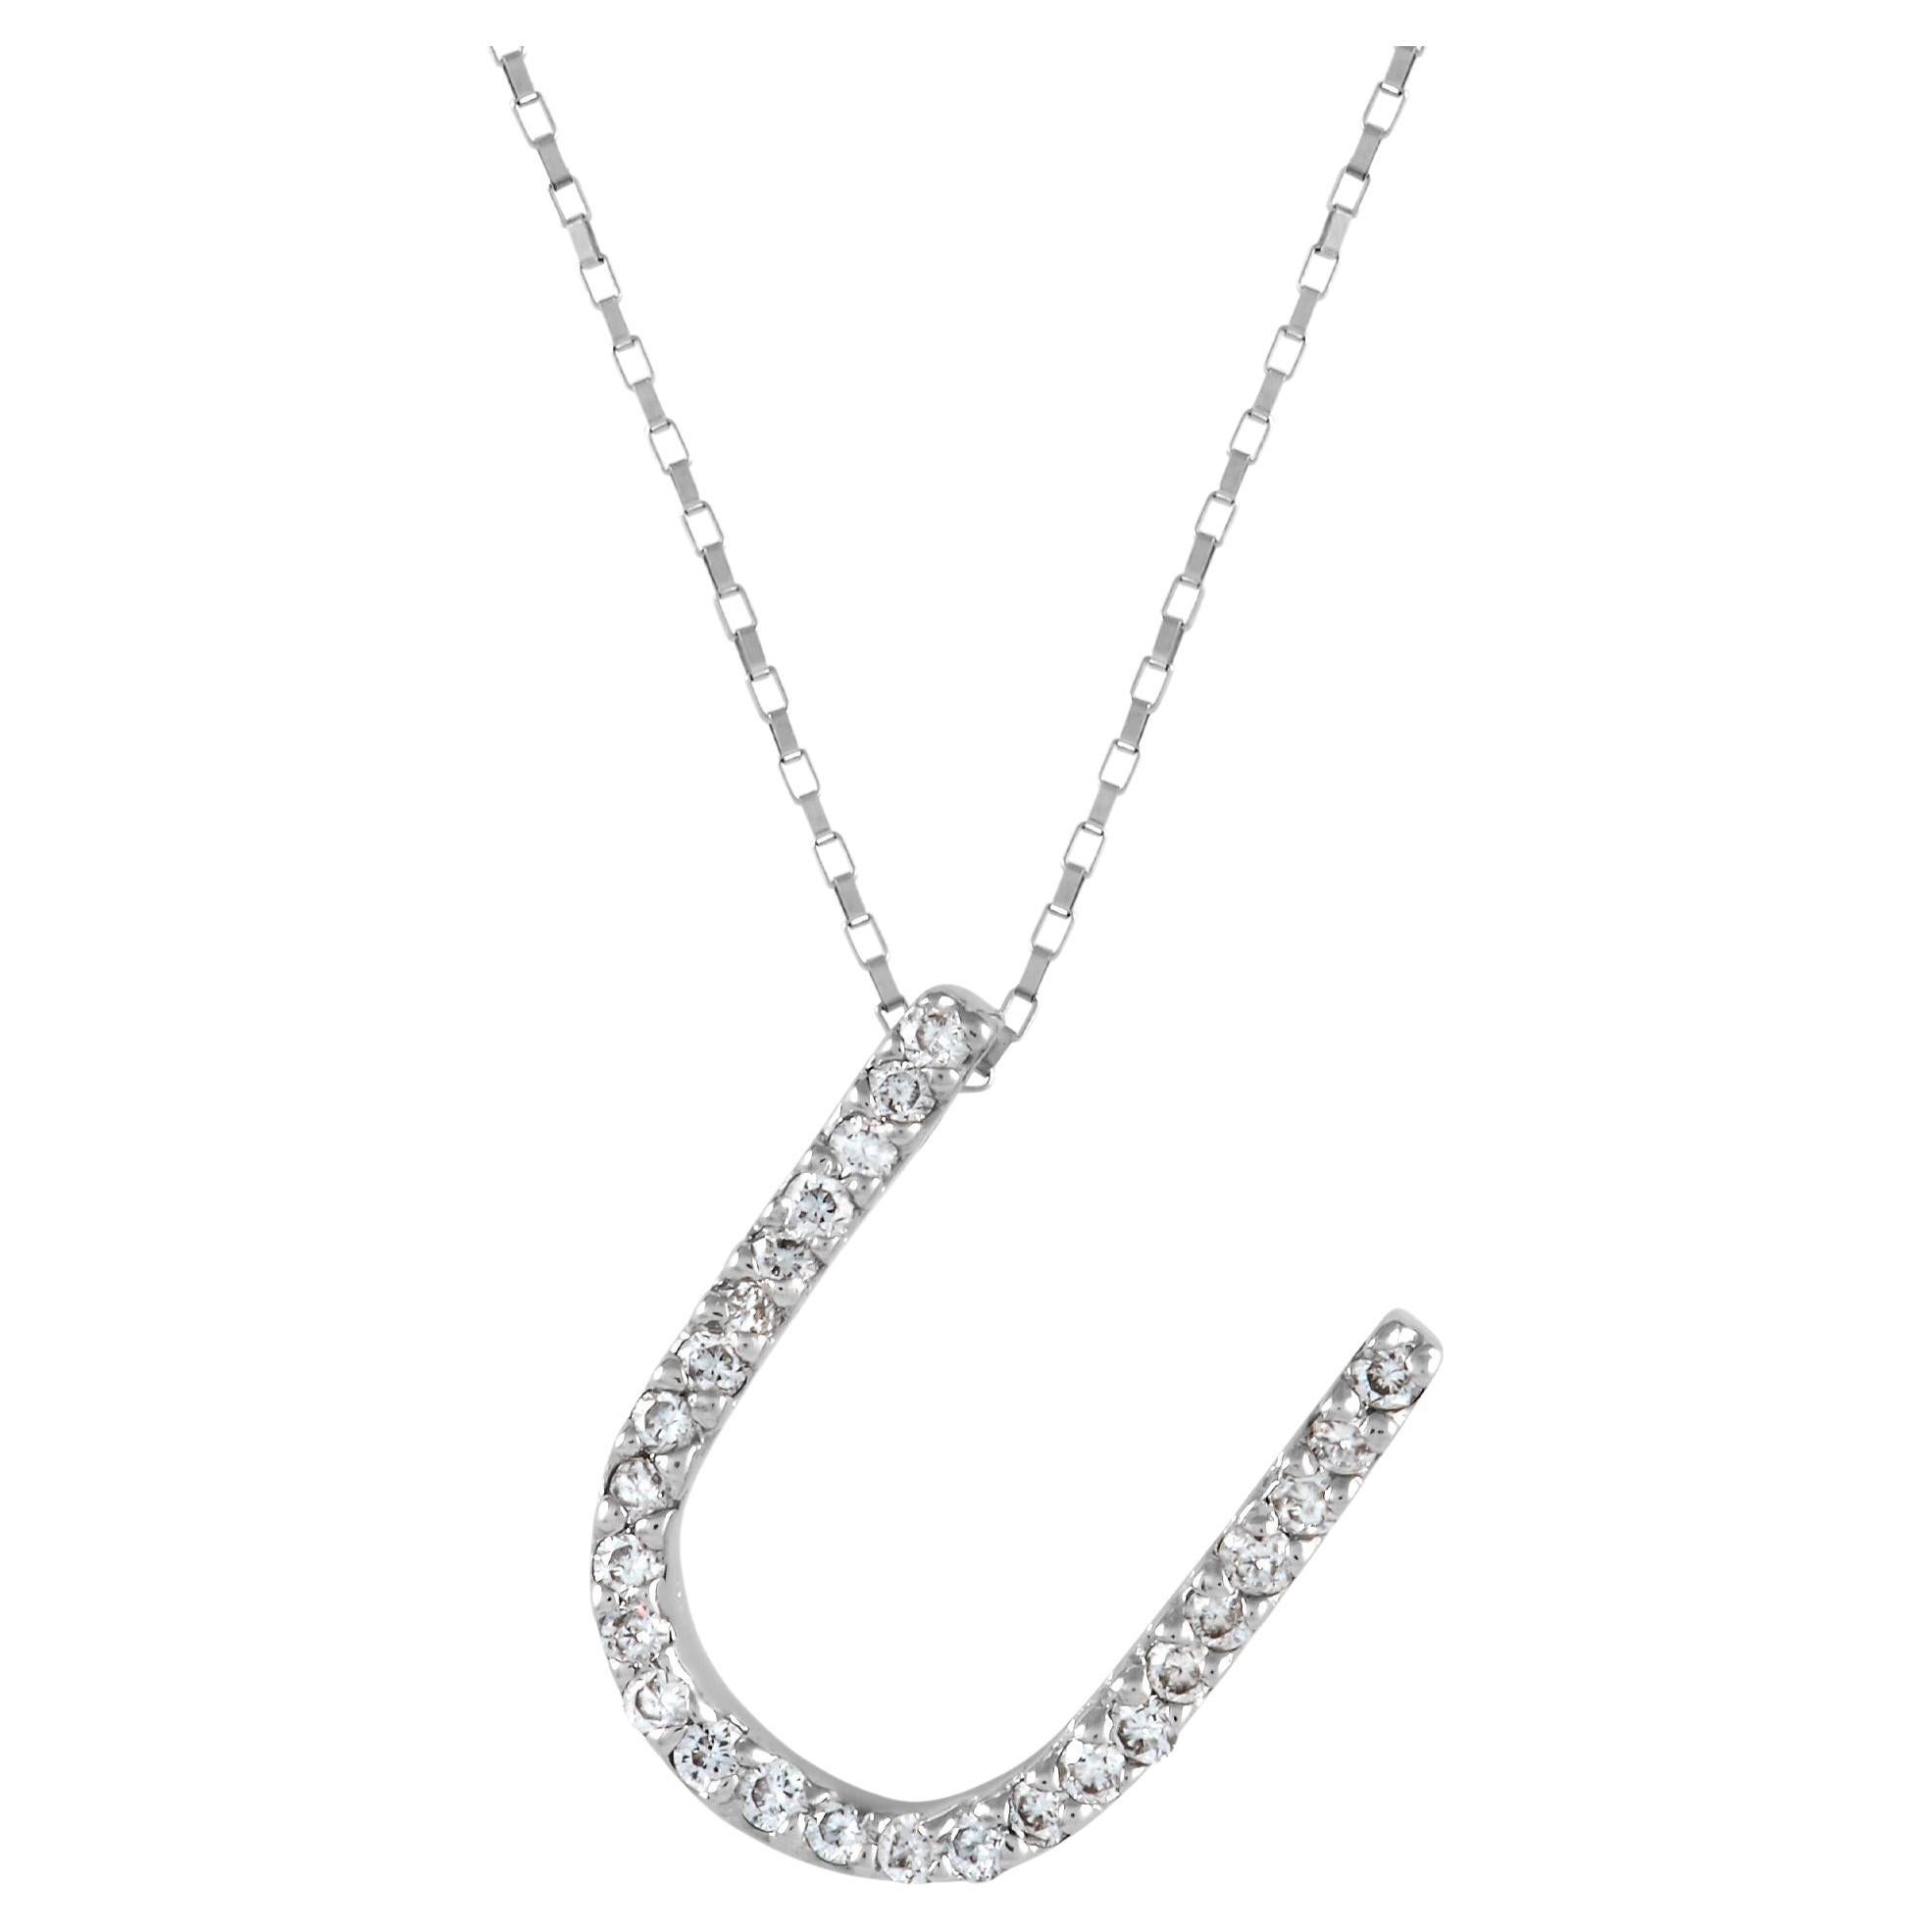 LB Exclusive 14K White Gold 0.17 Ct Diamond “U” Initial Necklace